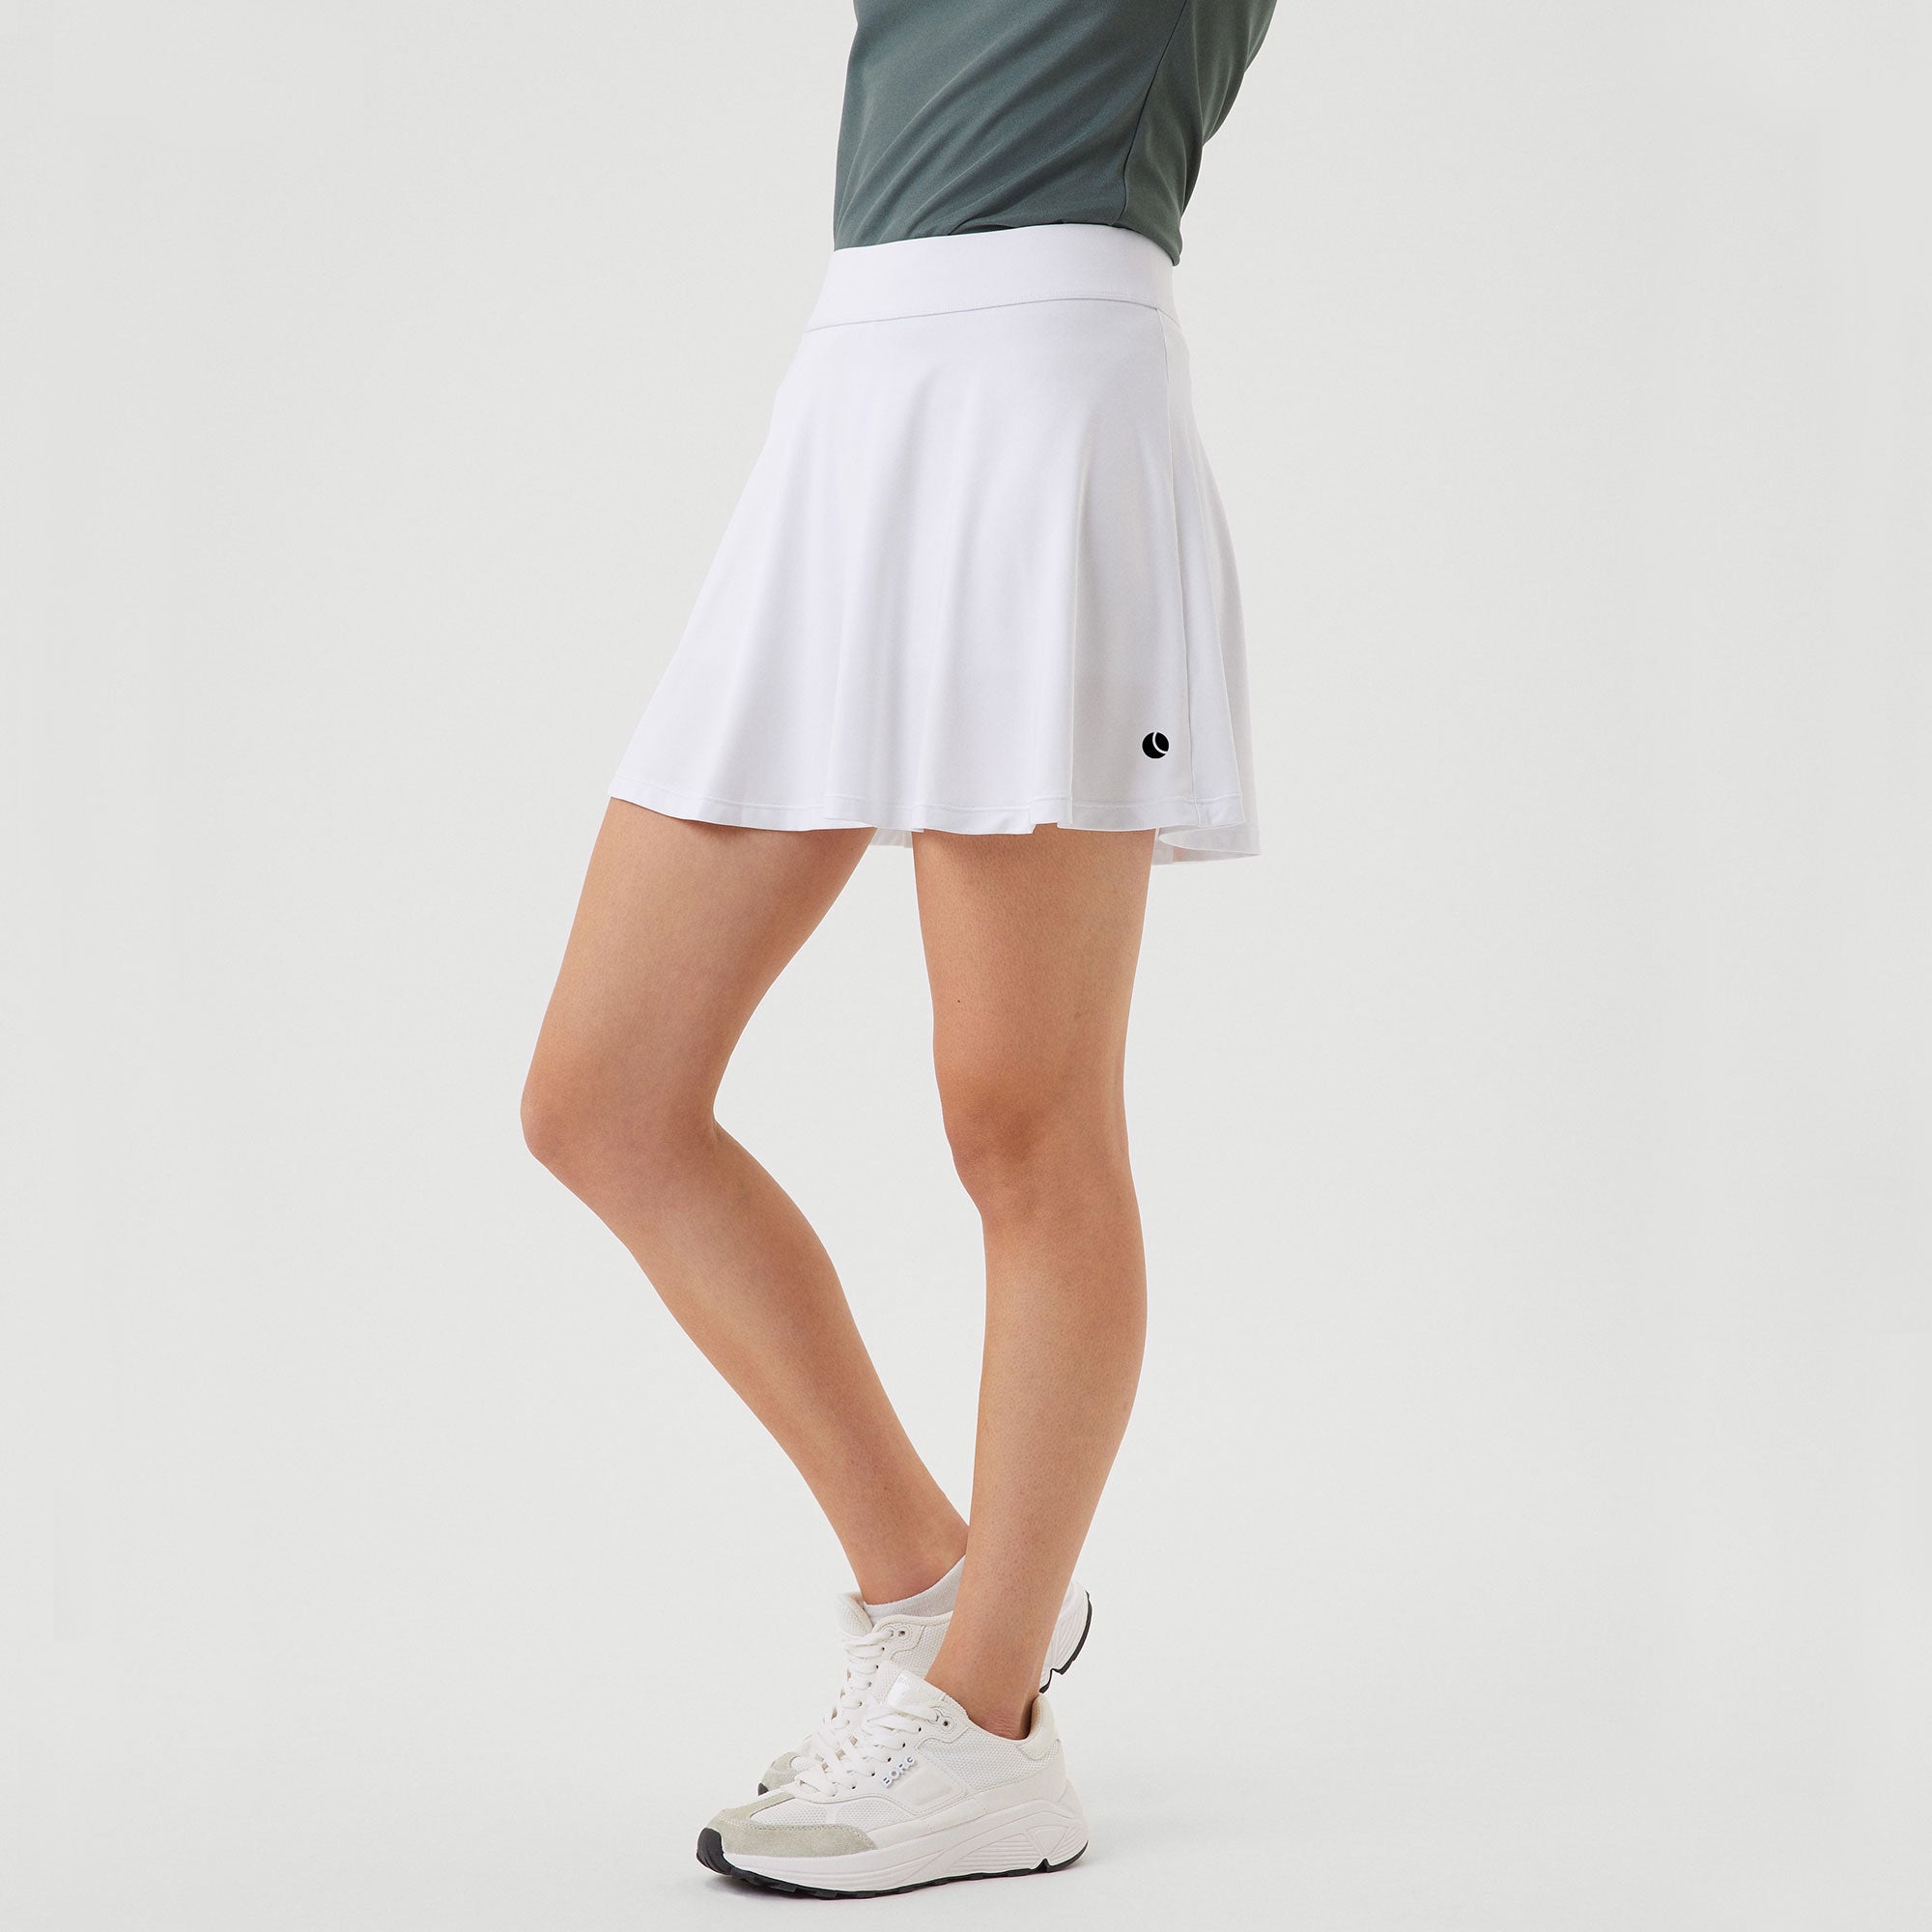 Björn Borg Ace Women's Jersey Tennis Skirt - White (1)